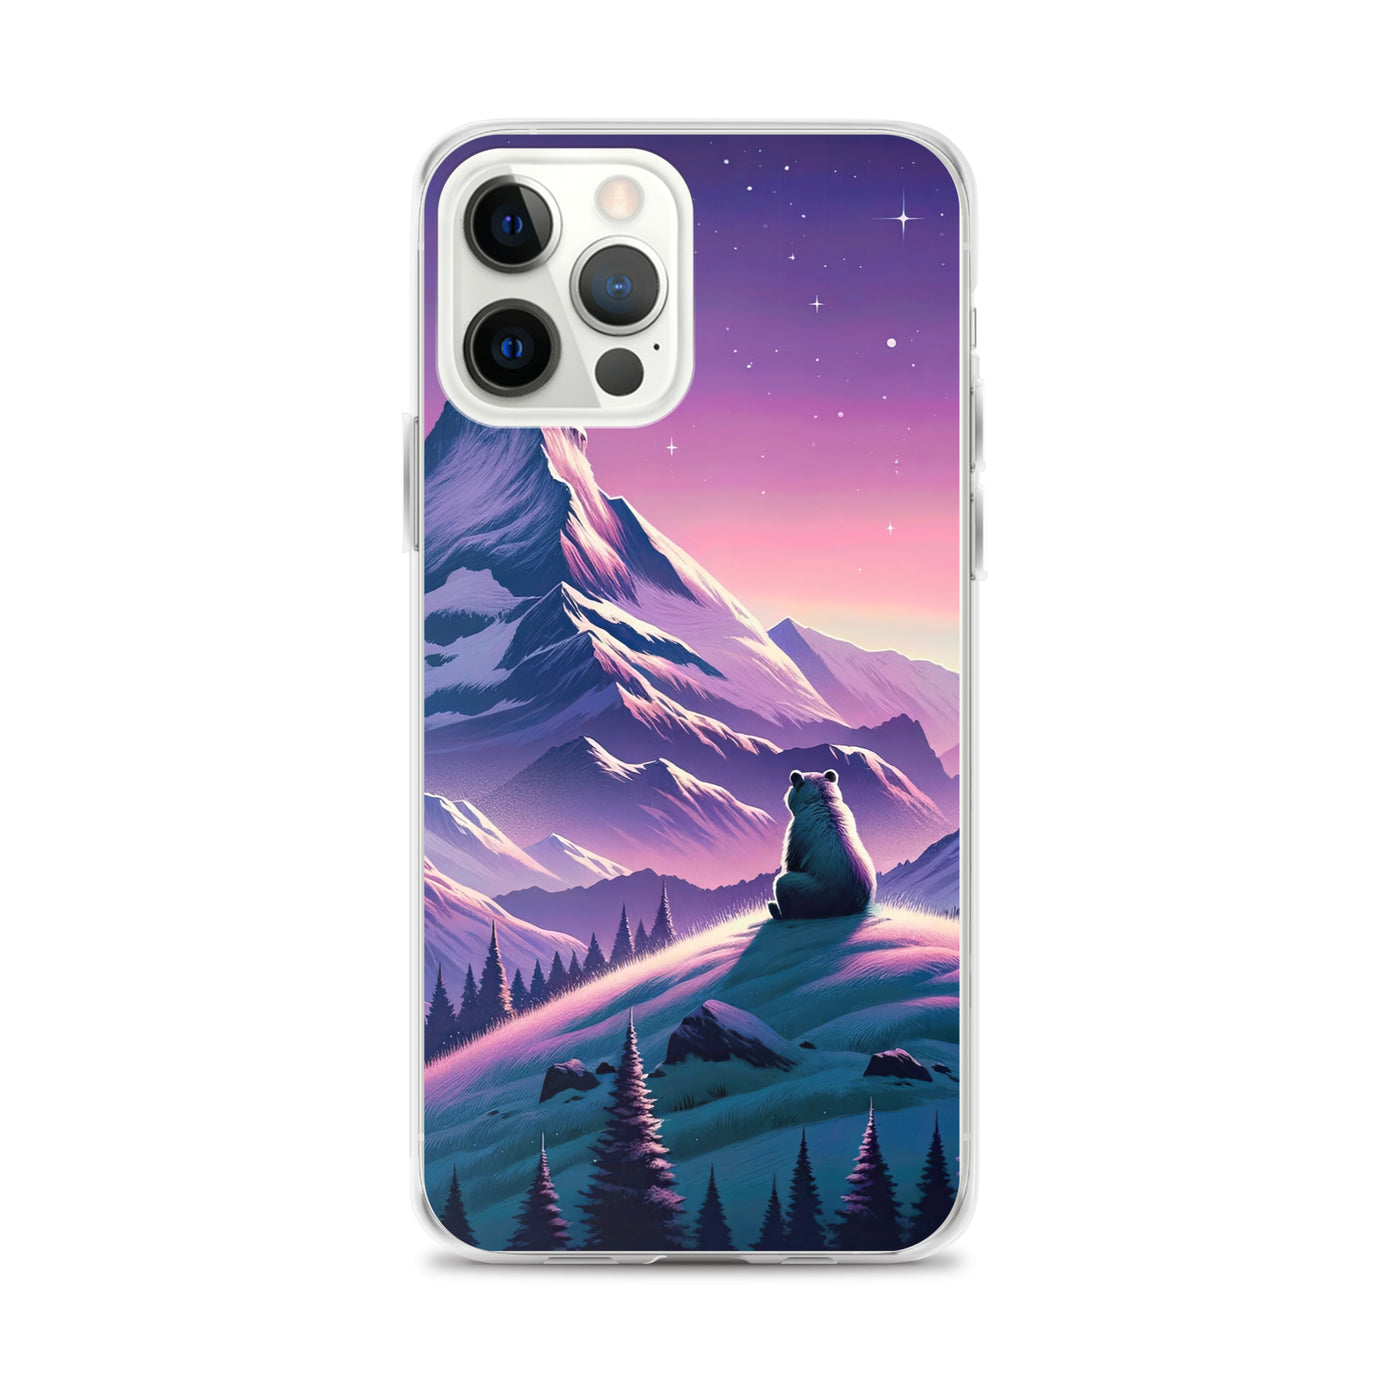 Bezaubernder Alpenabend mit Bär, lavendel-rosafarbener Himmel (AN) - iPhone Schutzhülle (durchsichtig) xxx yyy zzz iPhone 12 Pro Max